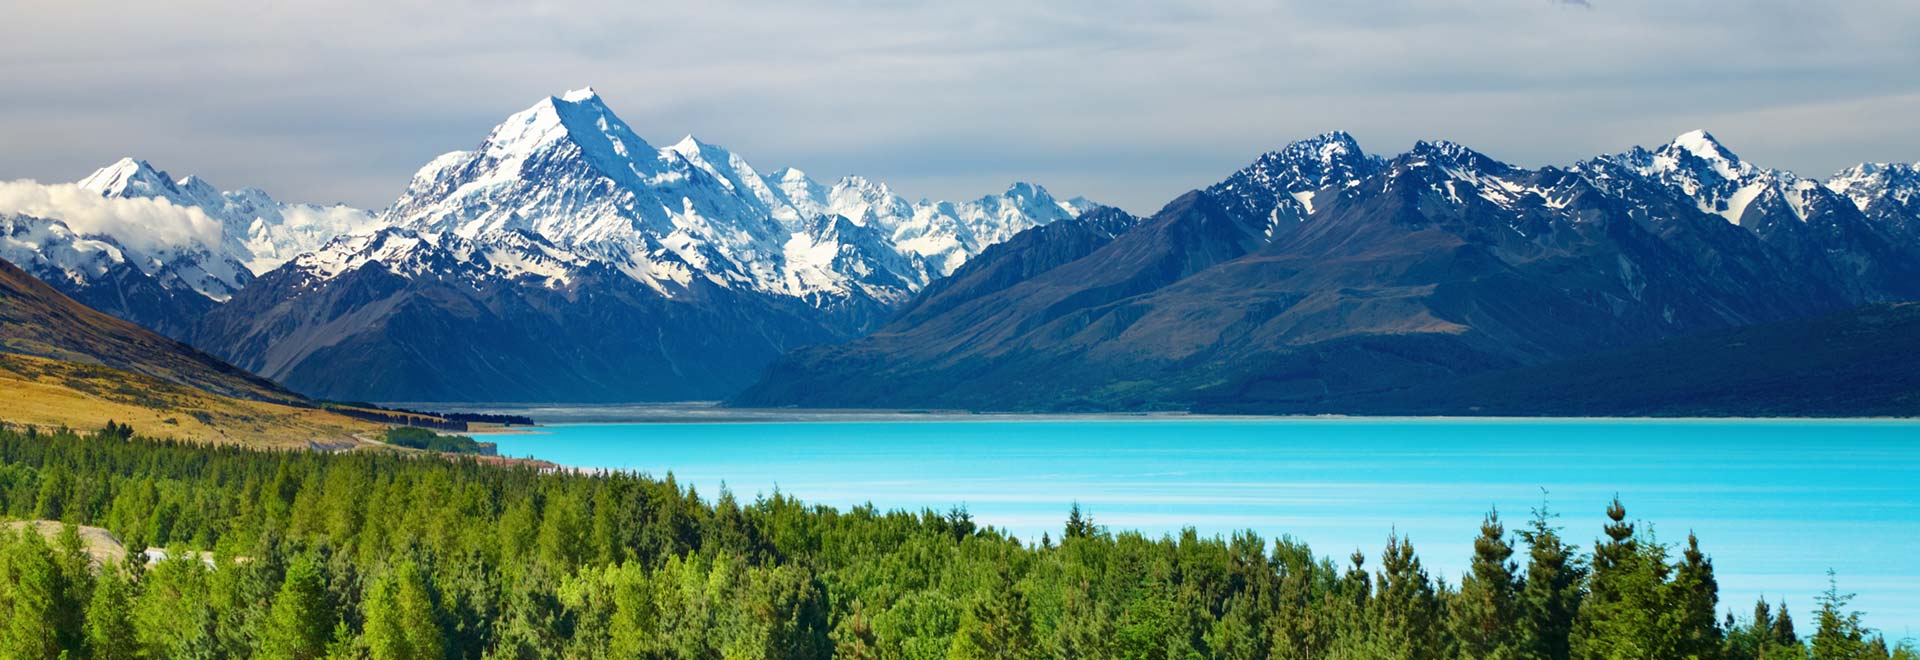 New Zealand Mount Cook and Pukaki Lake